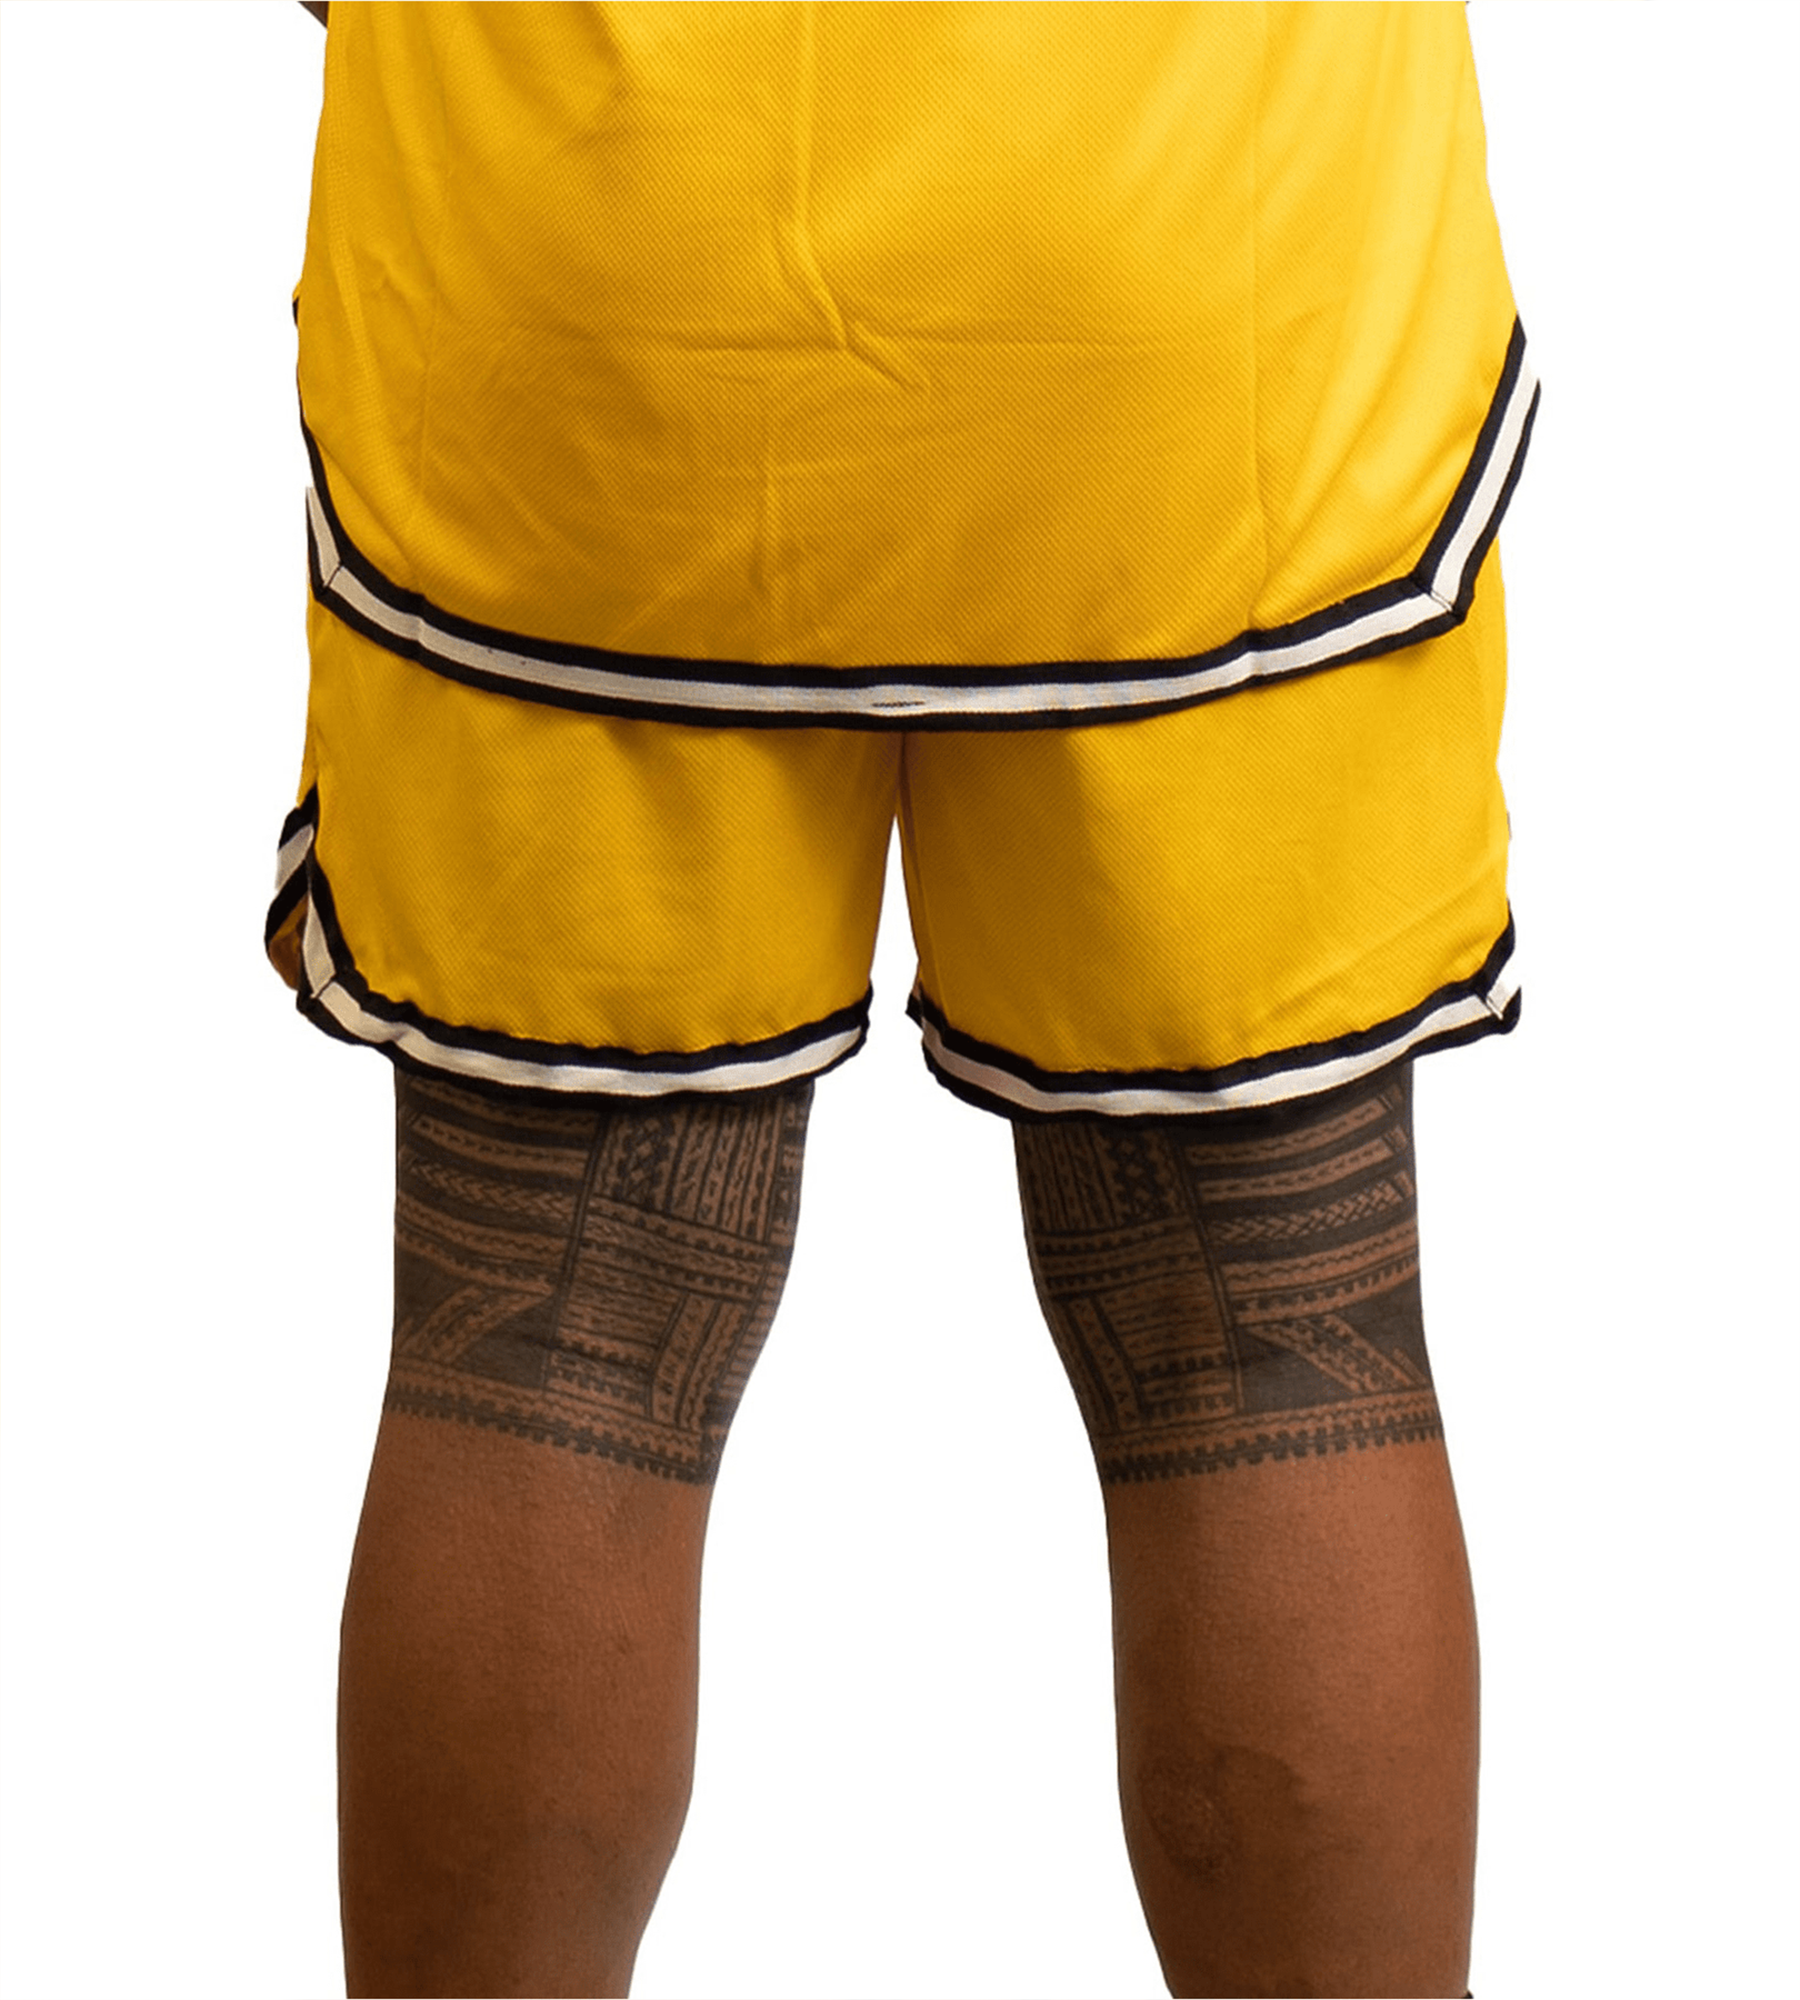 FitnessFox Basketball Shorts  - Yellow